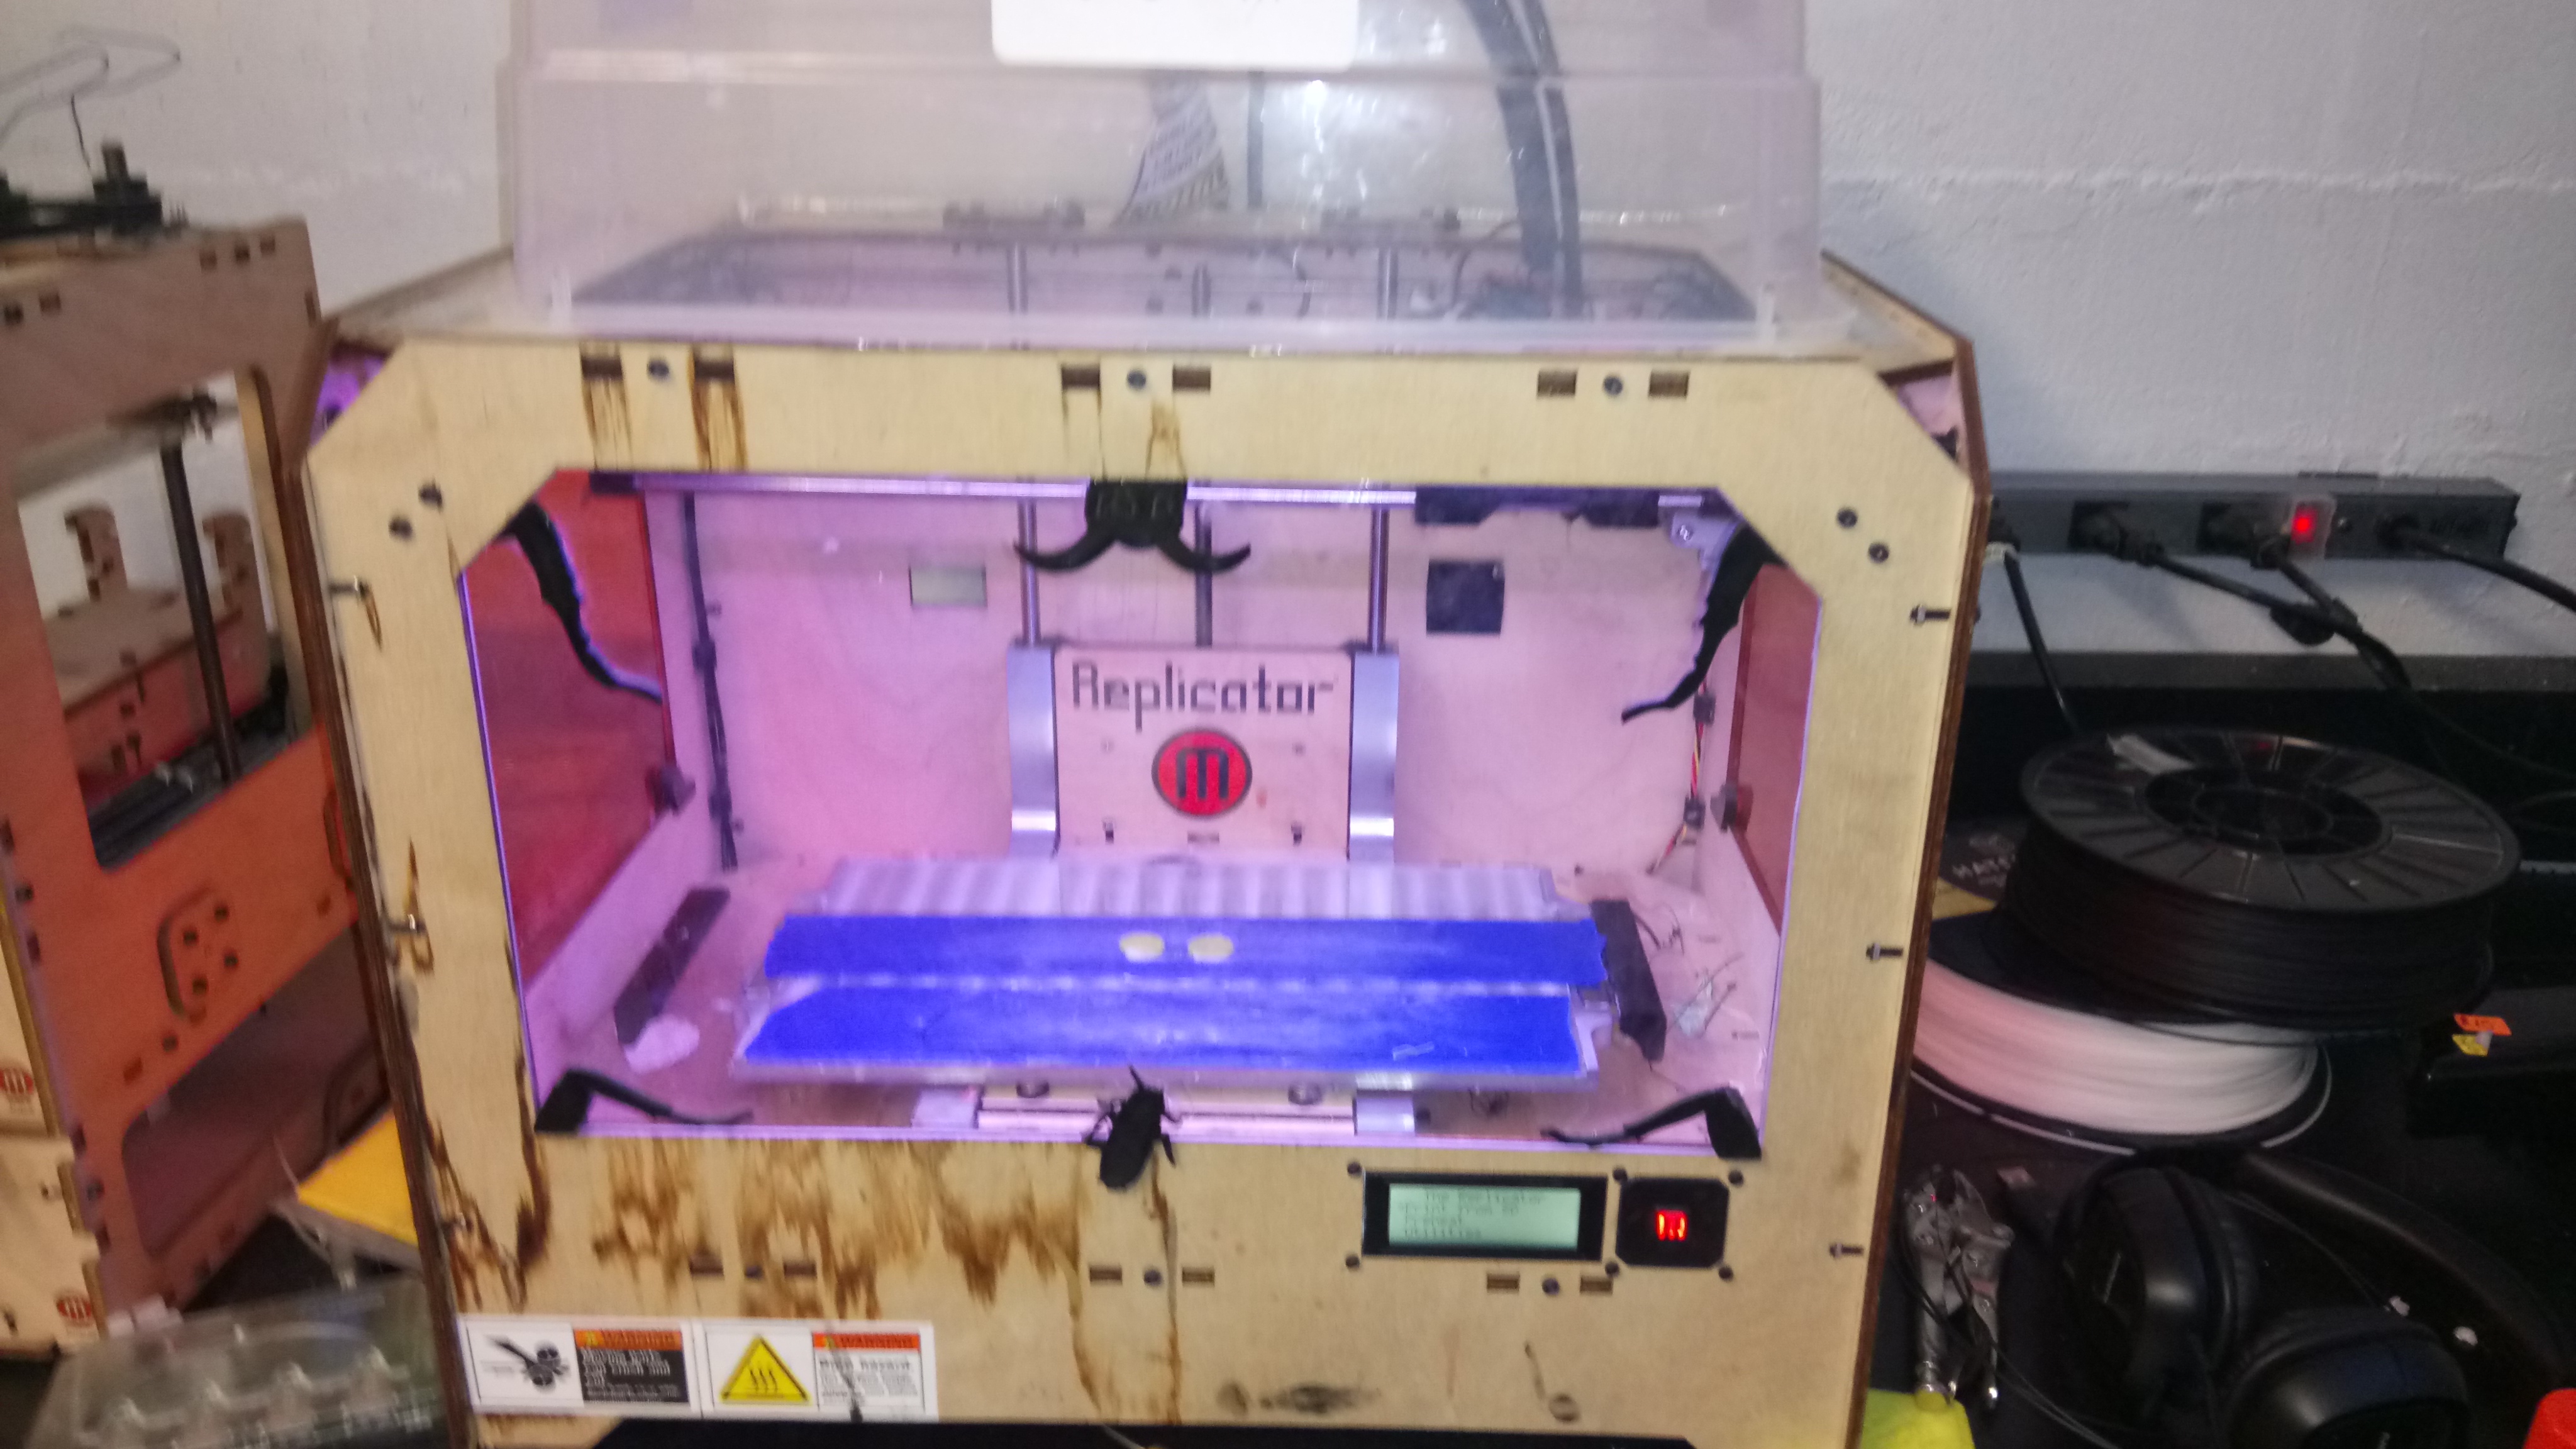 File:Makerbot 3d printer.JPG